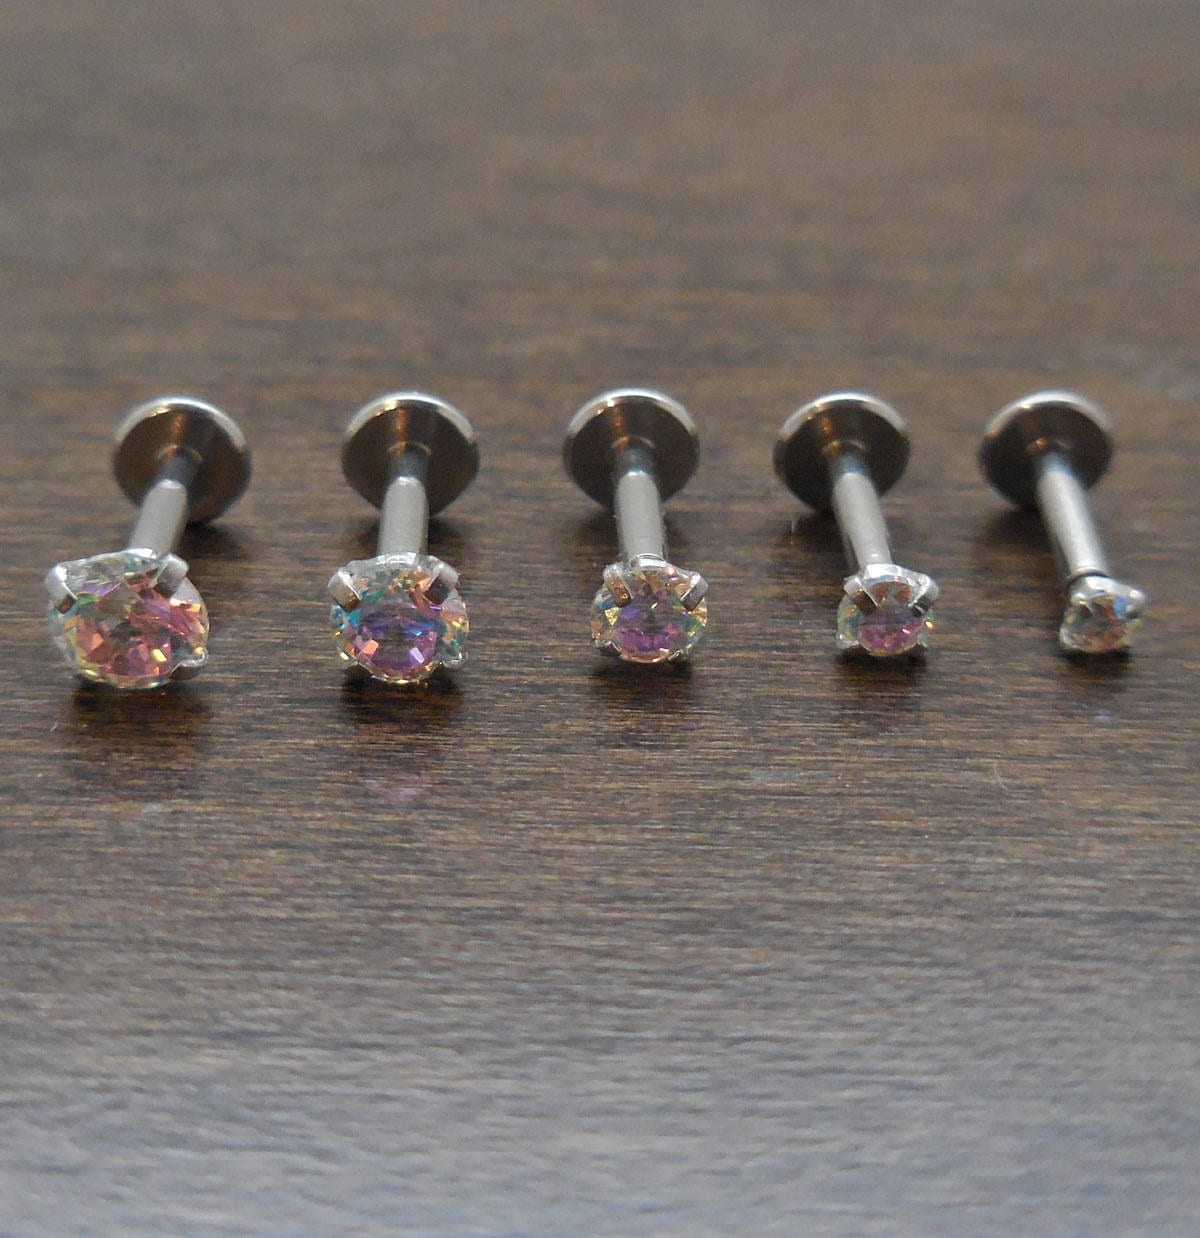 16G 6mm 1/4" Rainbow AB Crystal Triple Forward Internally Threaded Helix Earrings Cartilage Labret Stainless Steel Tragus